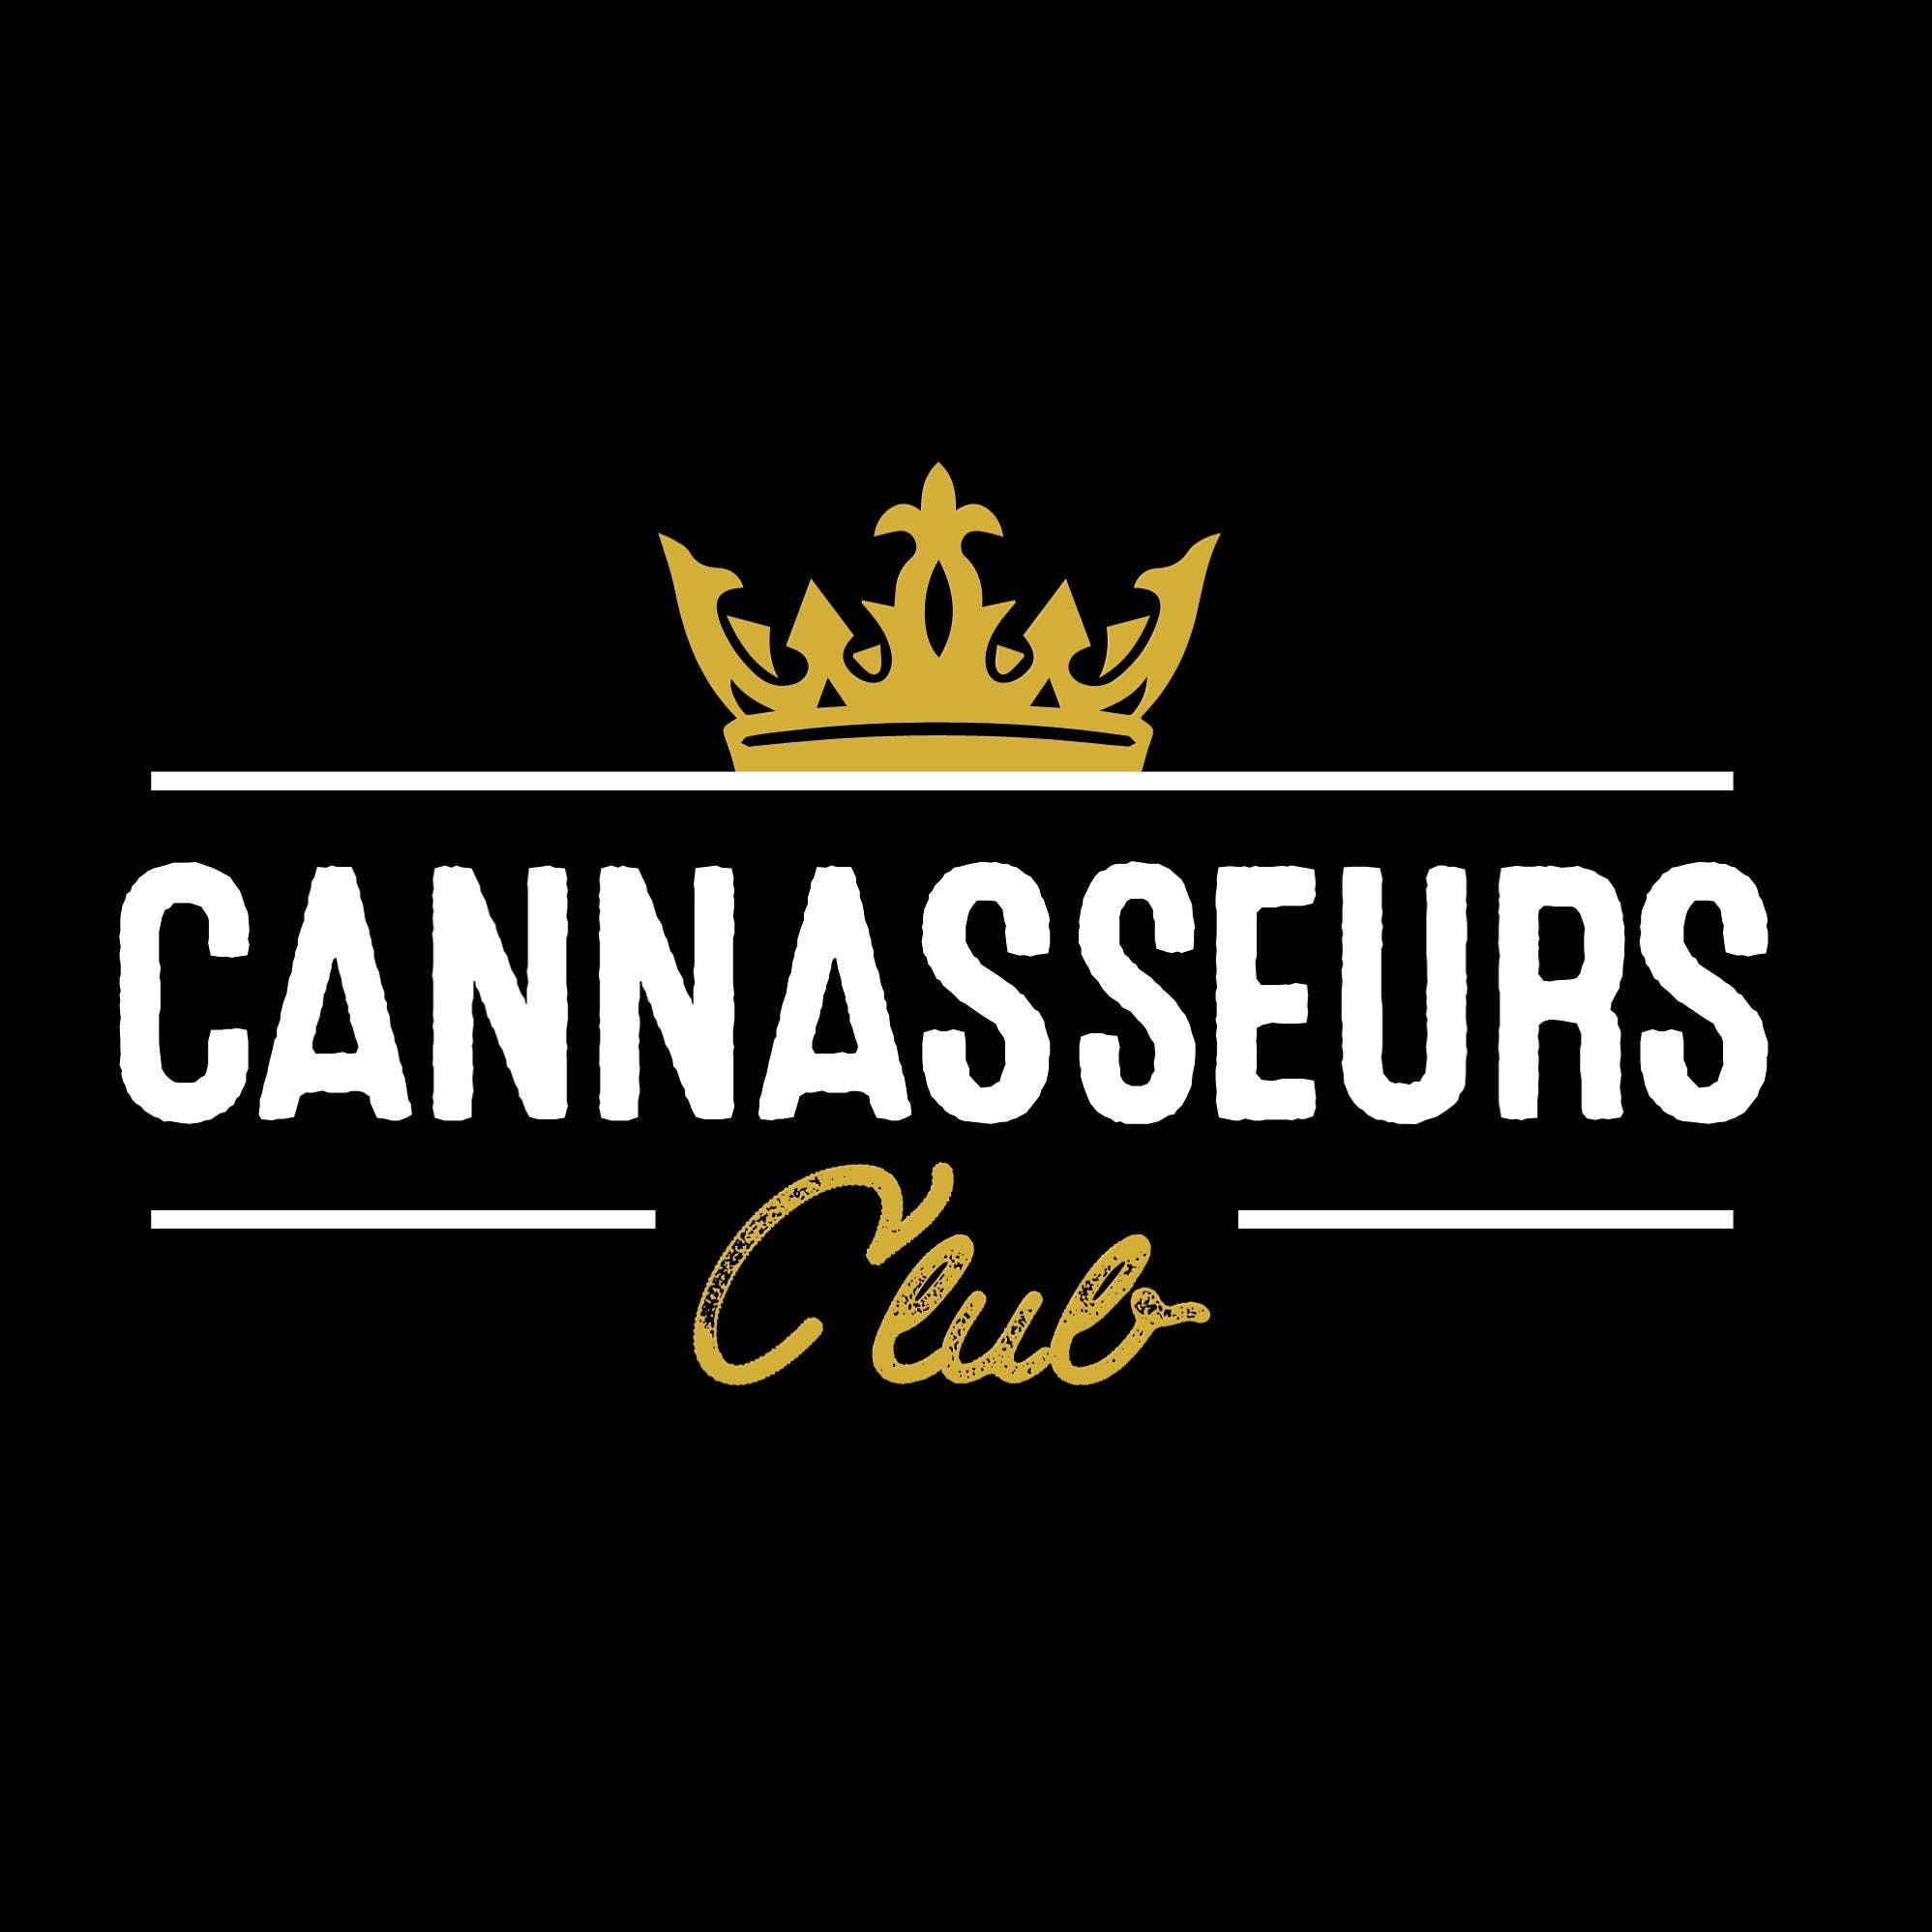 marijuana-dispensaries-cannasseurs-club-in-mission-hills-exclusive-larry-og